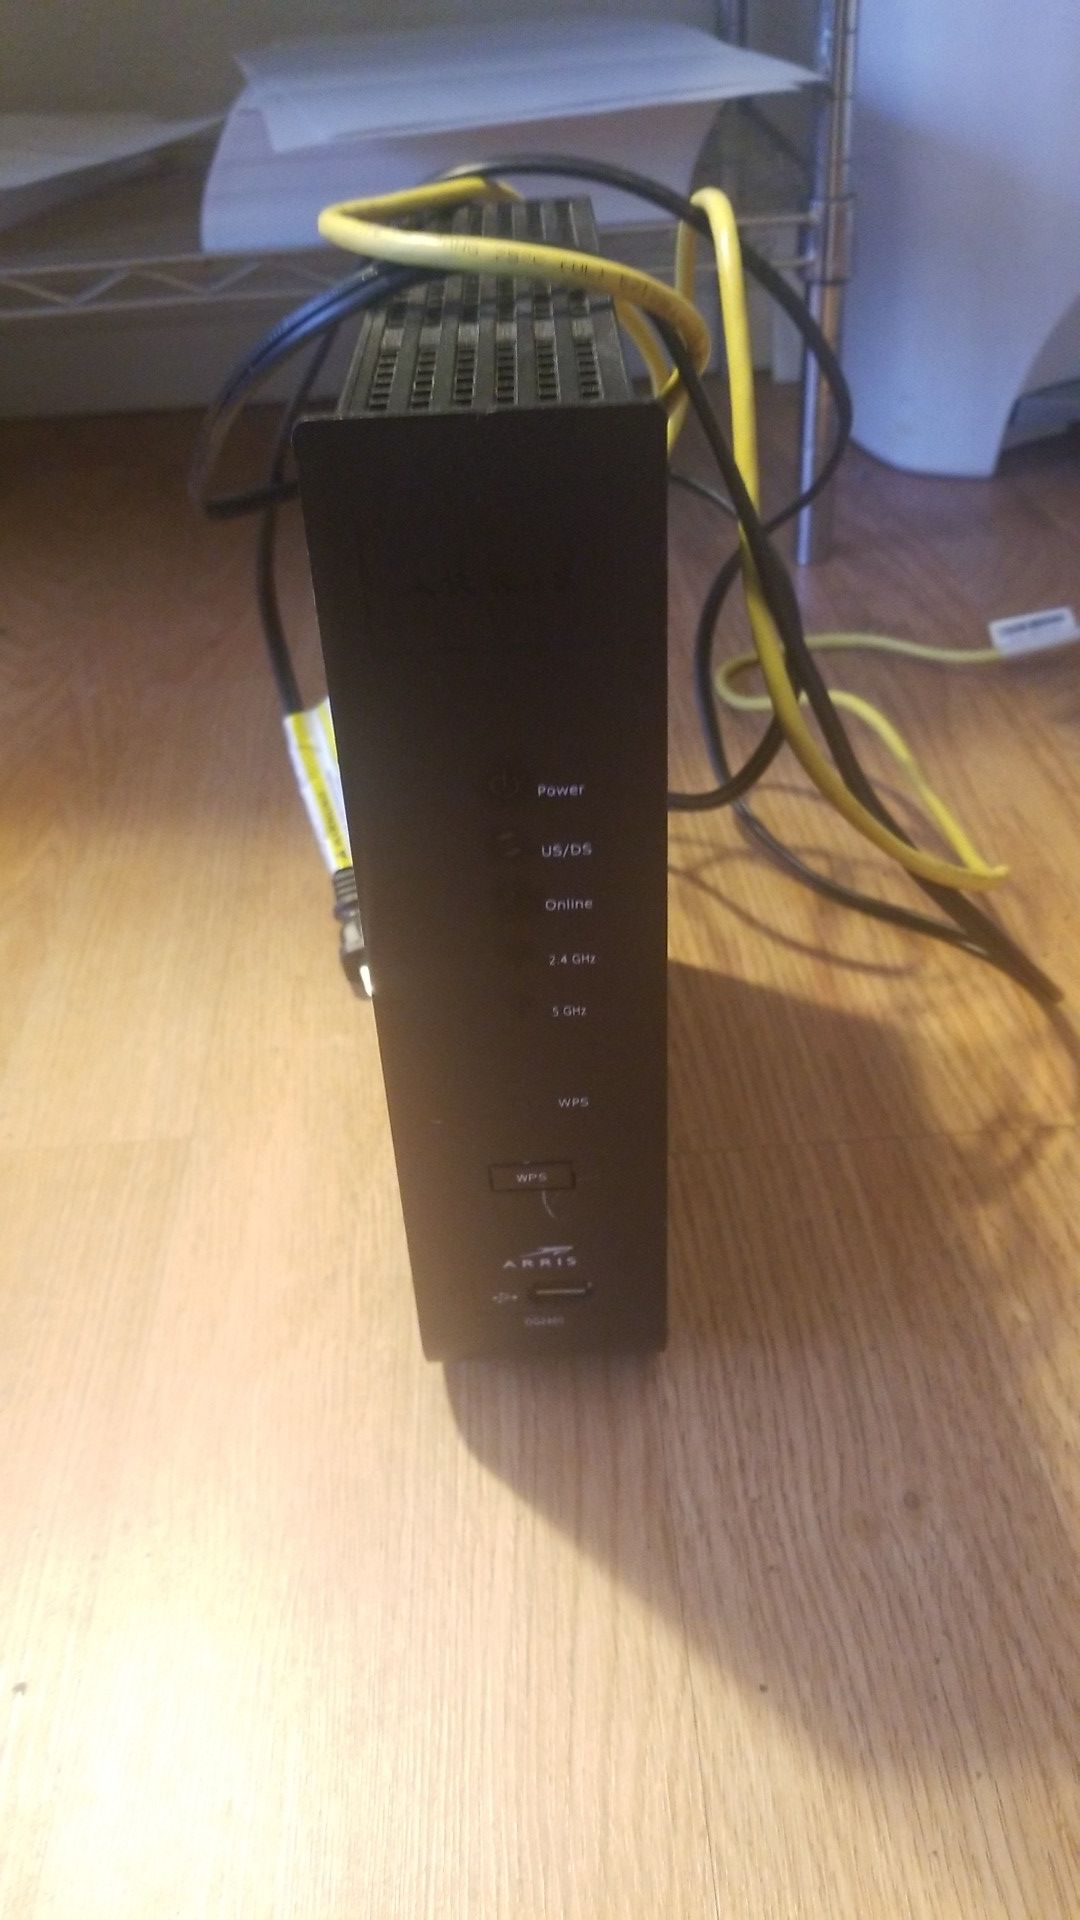 Arris wireless modem / router